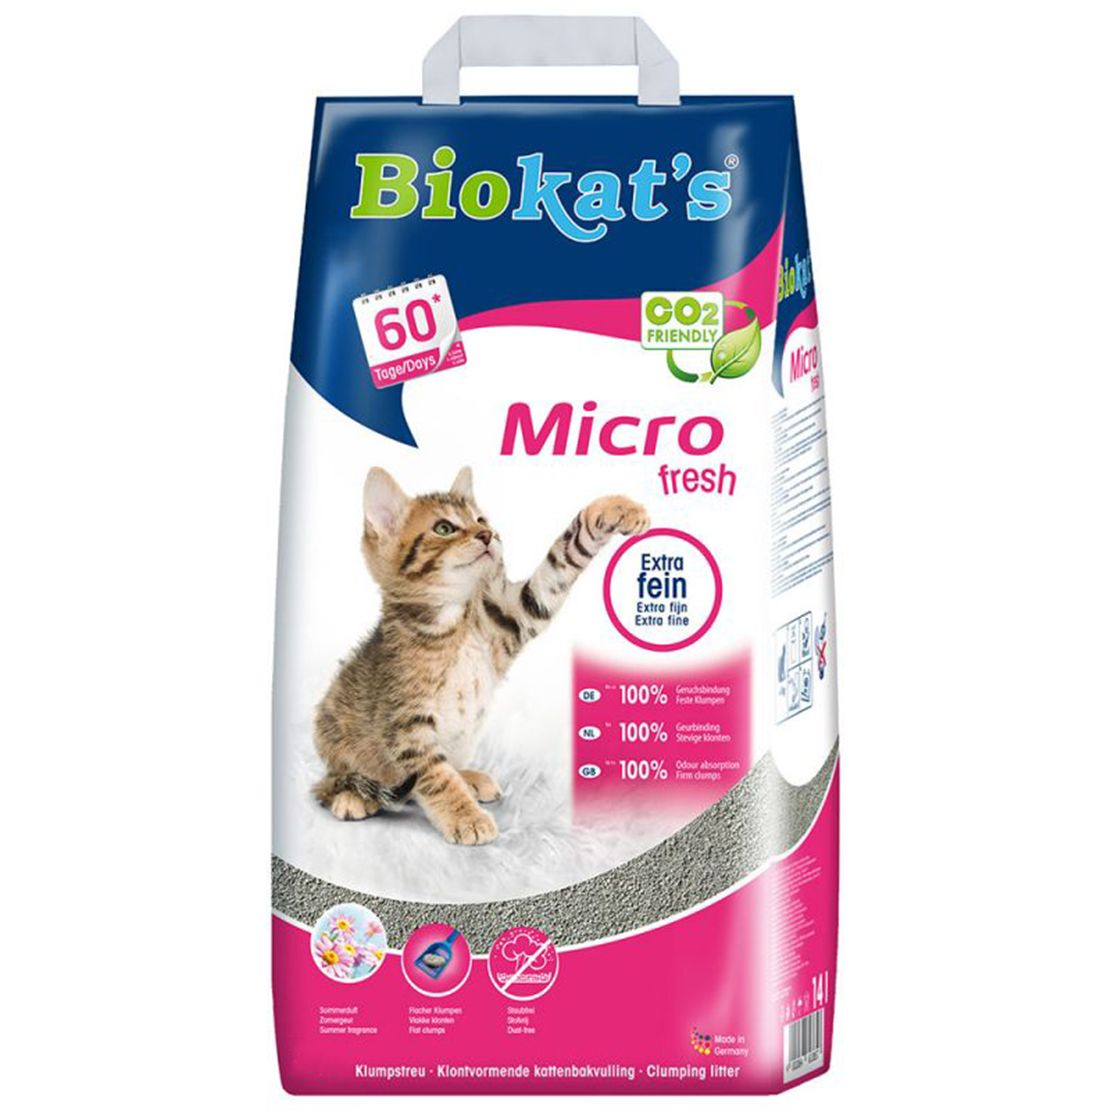 Biokat’s Micro fresh litieră 14 l